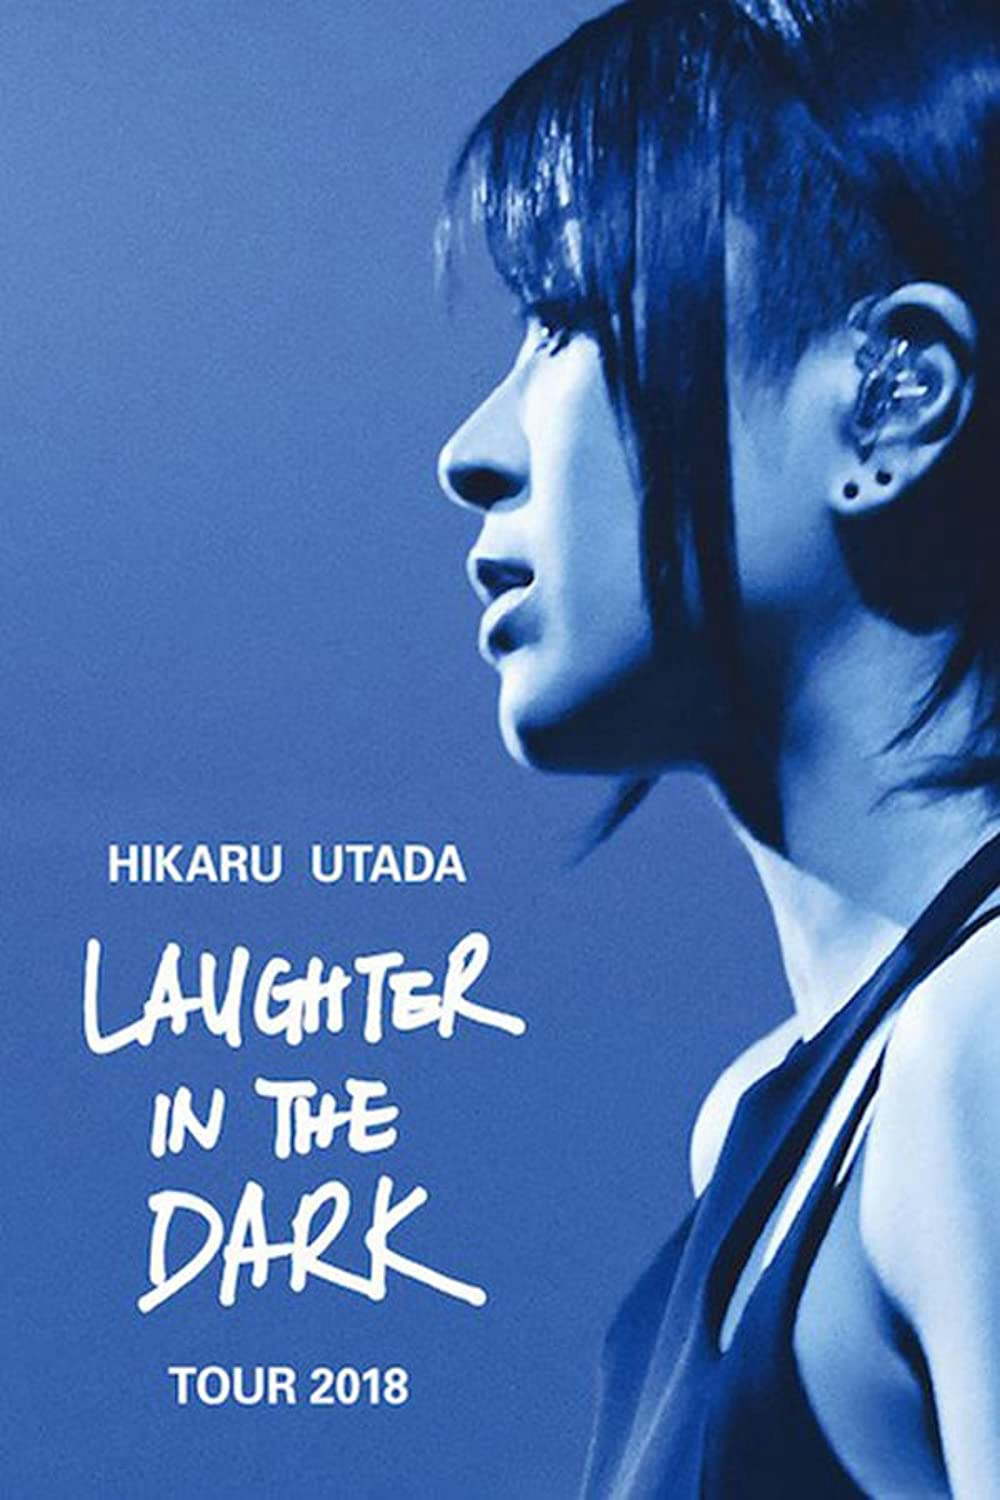 Hikaru Utada: Tiếng cười trong bóng tối 2018 - Hikaru Utada Laughter in the Dark Tour 2018